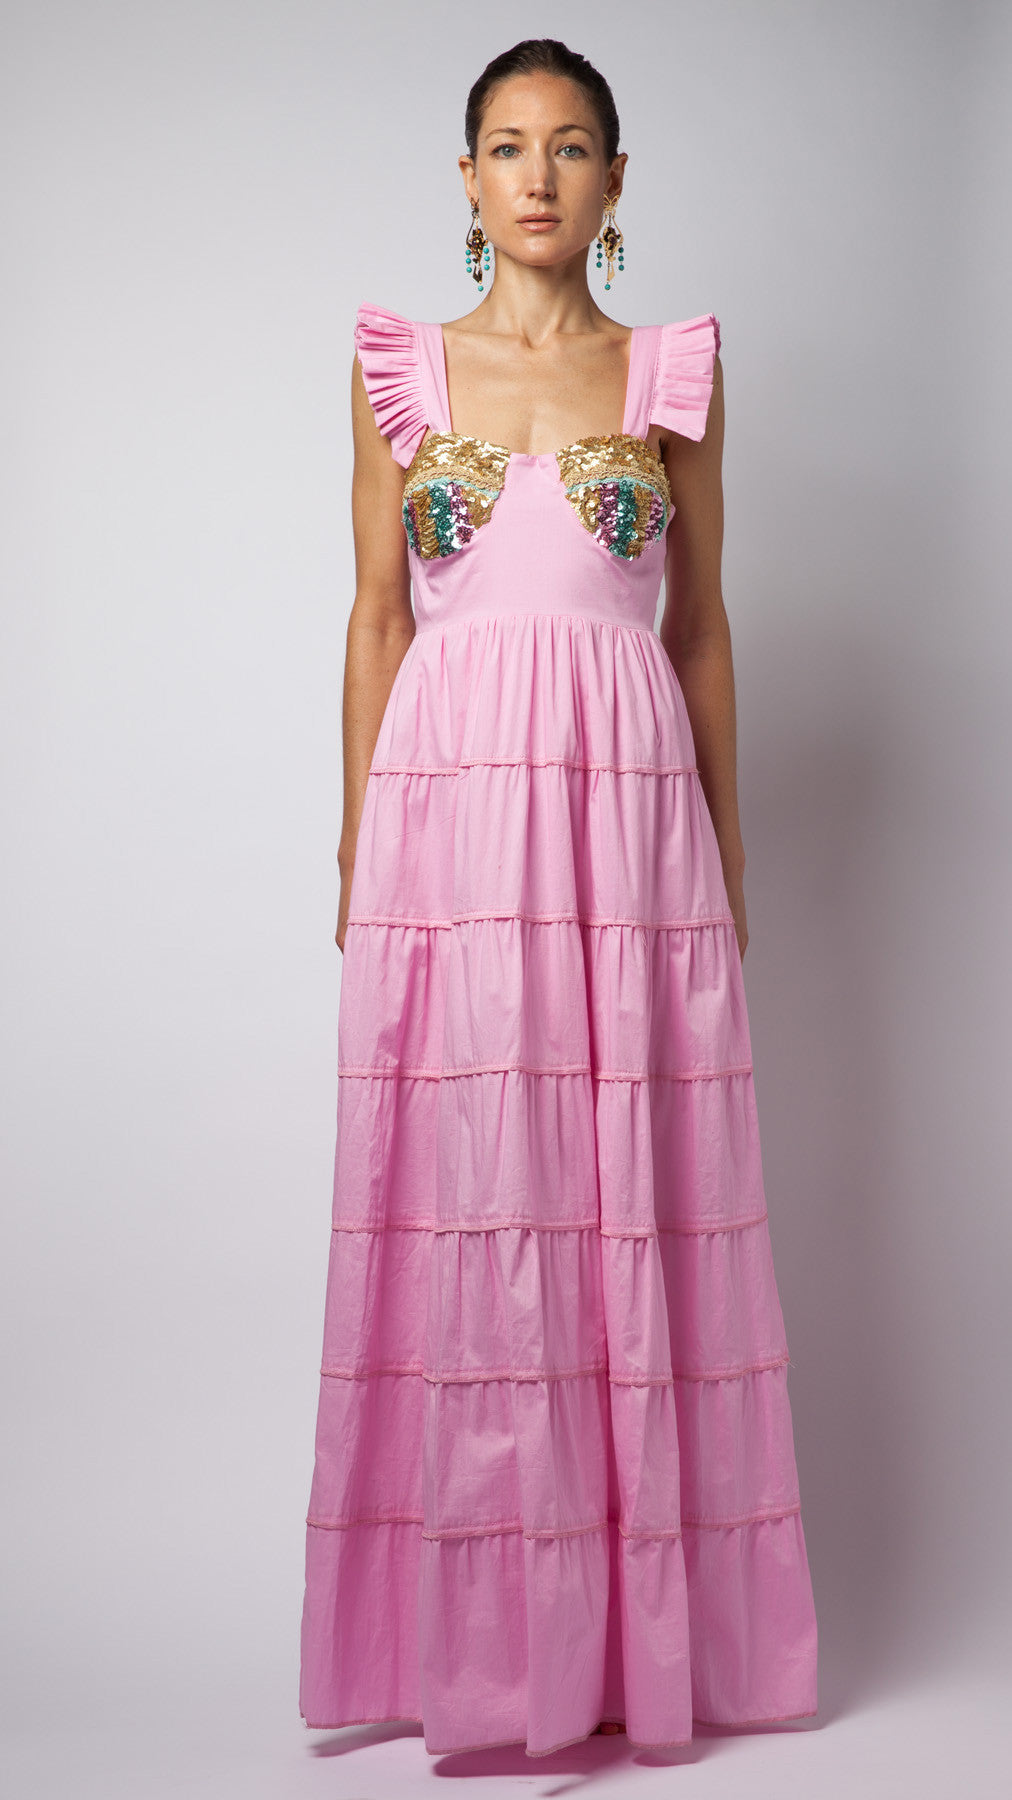 pink cotton dress